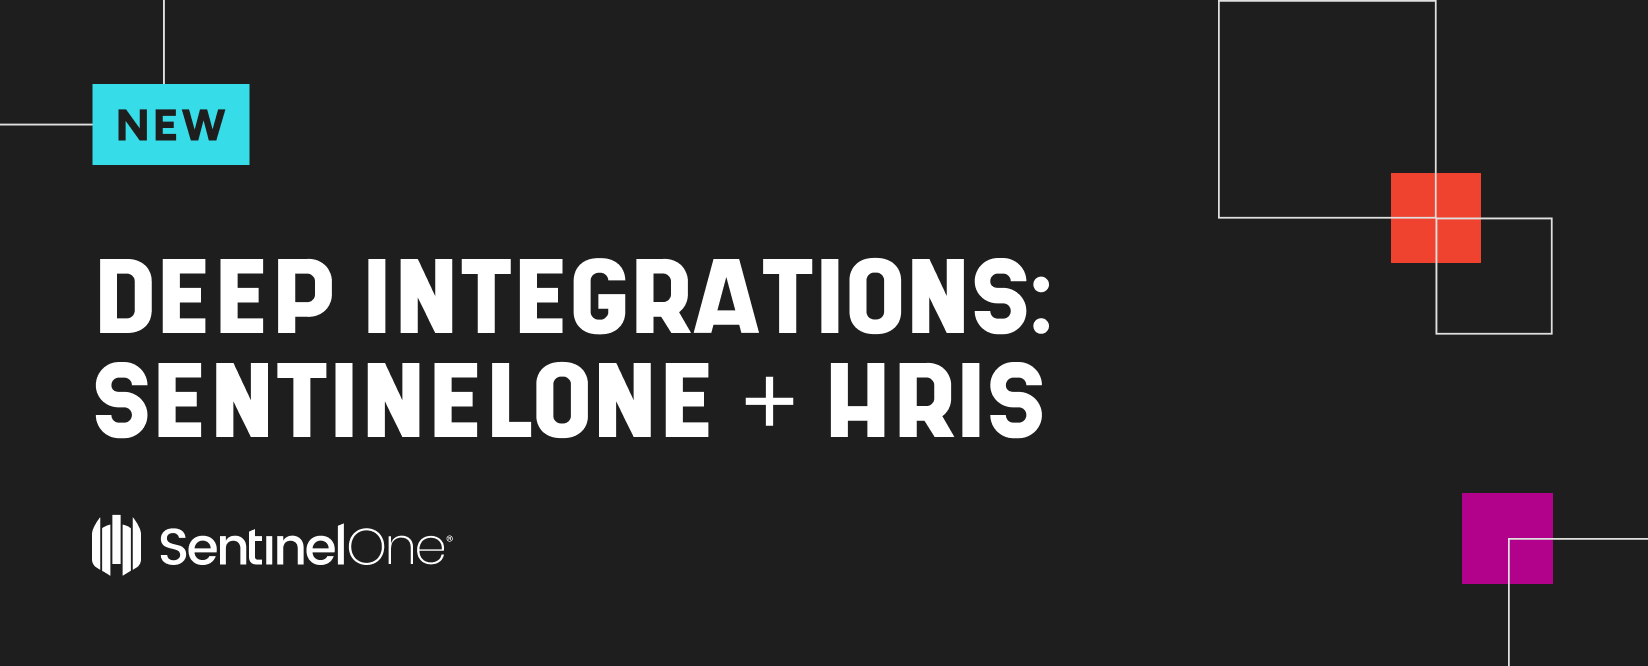 DDRR HRIS Integrations 1648x666-1